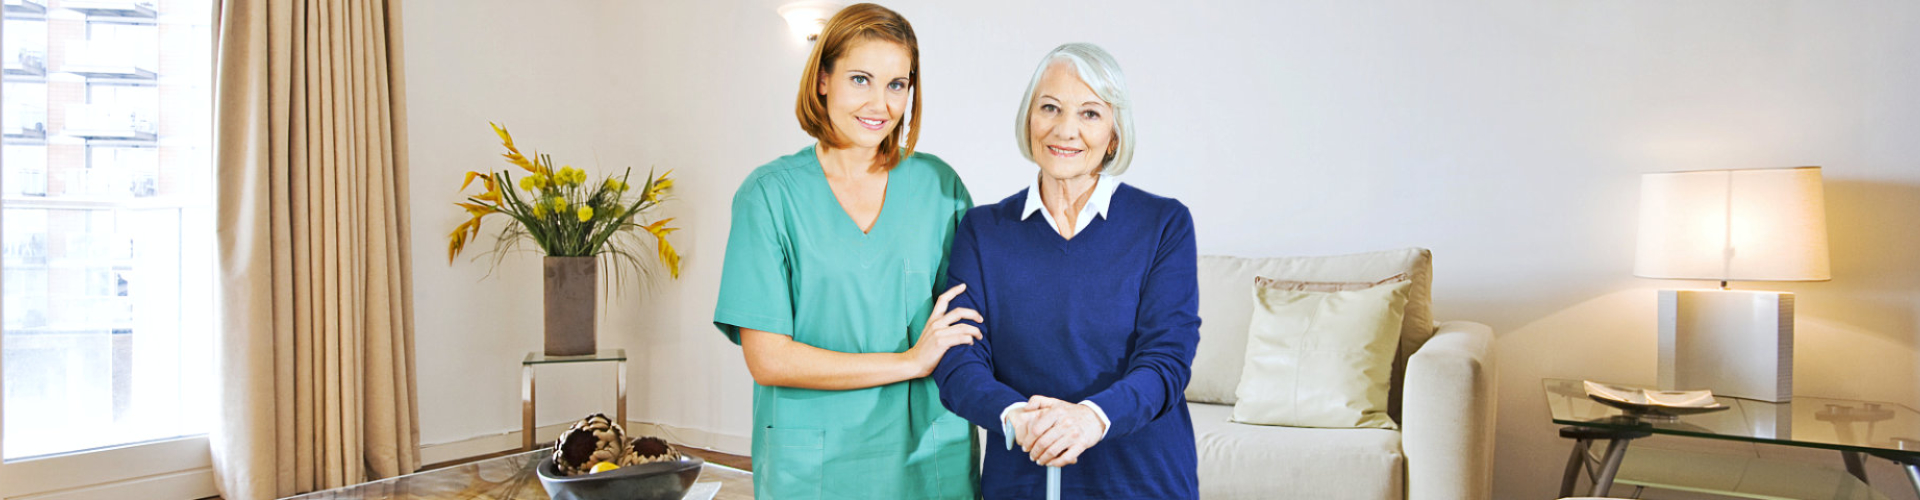 Caregiver and Senior woman smiling